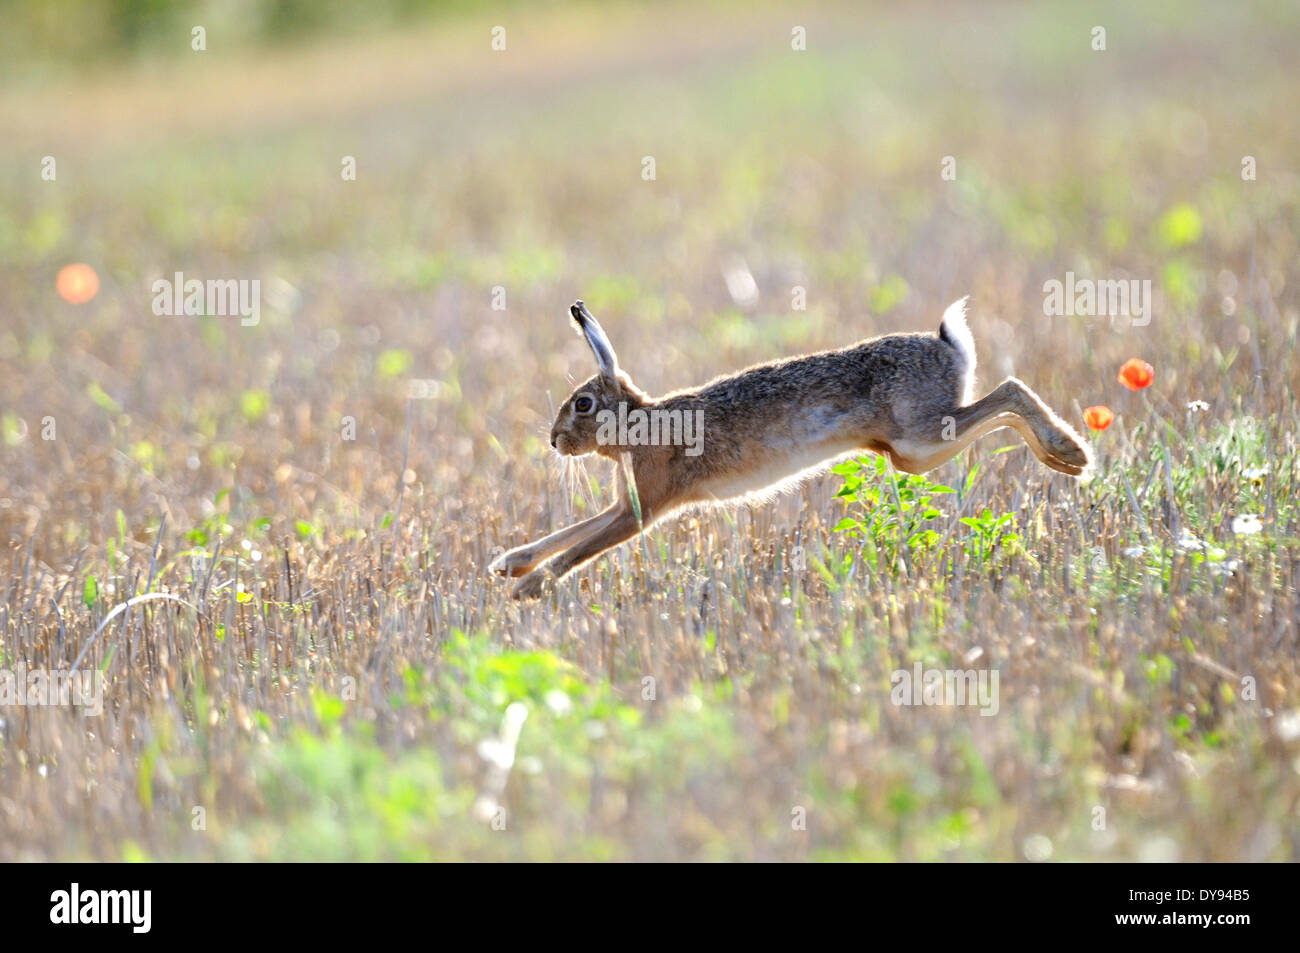 Hare, Rabbit, Lepus europaeus Pallas, brown hare, bunny, animal, animals, Germany, Europe, Stock Photo